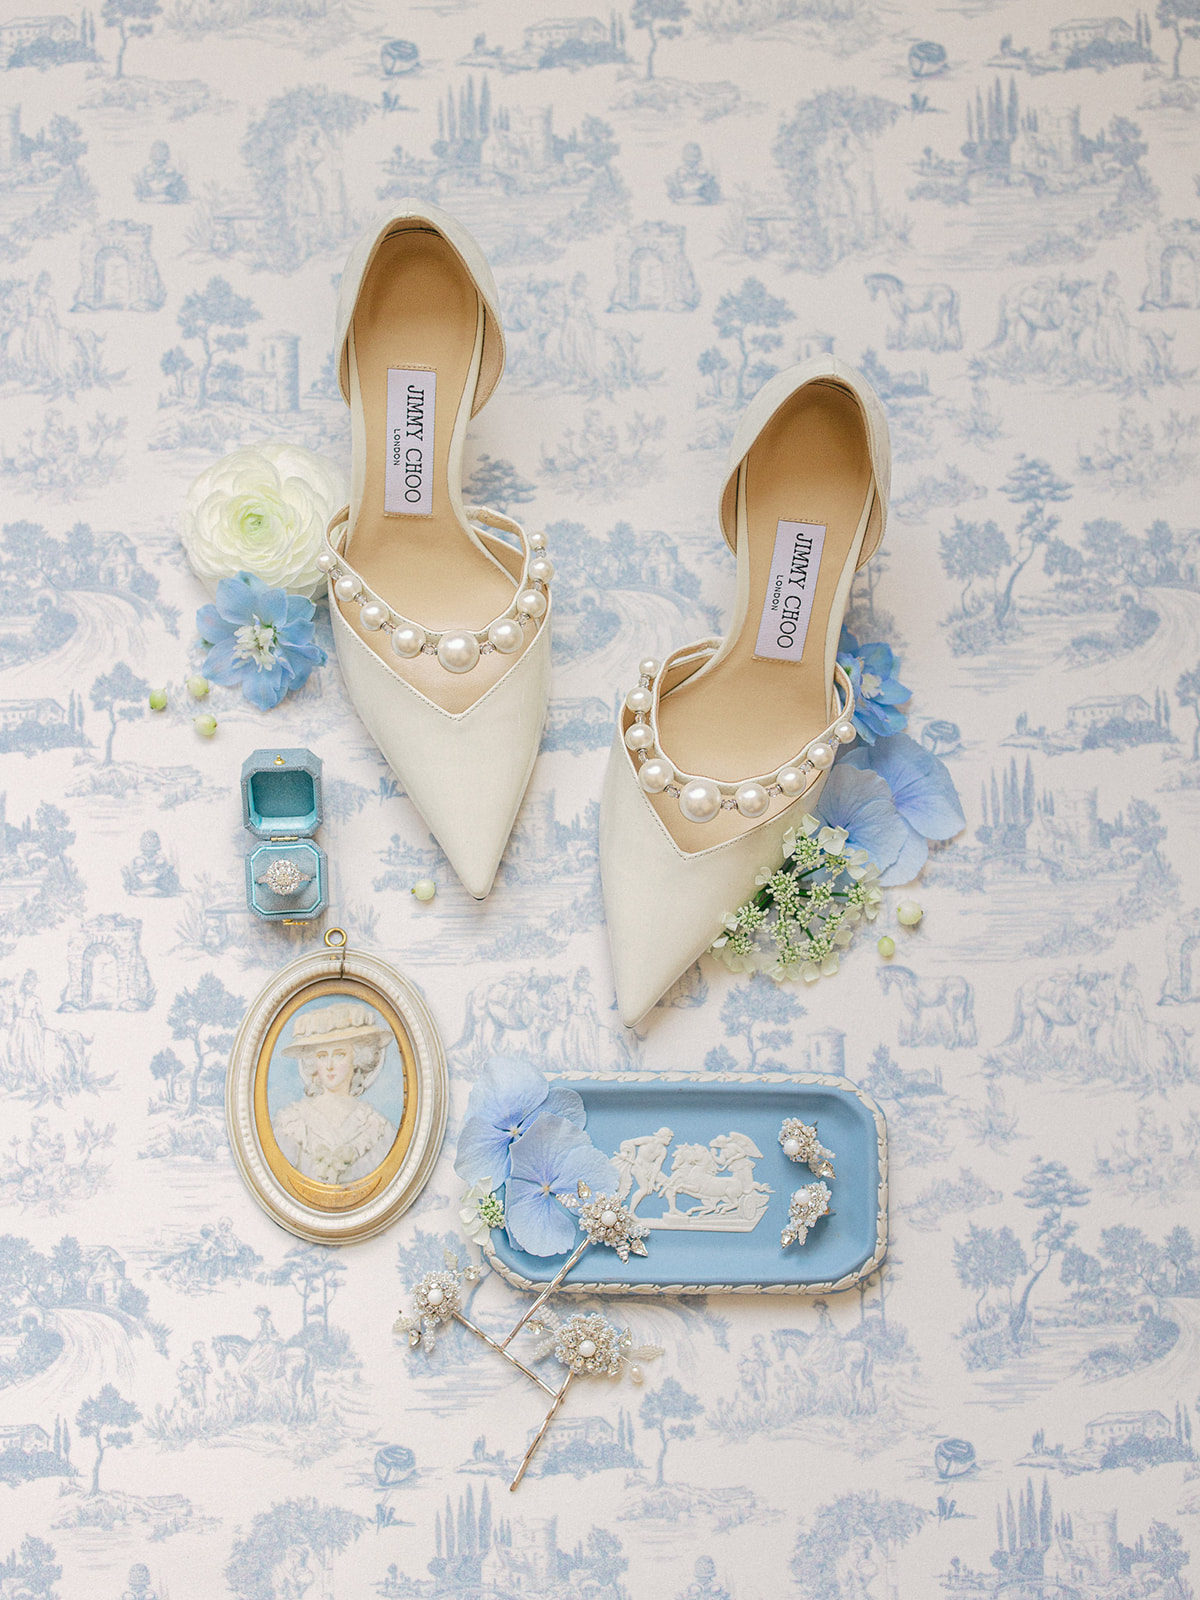 Blue and white bridal details for a destination Ireland wedding elopement.